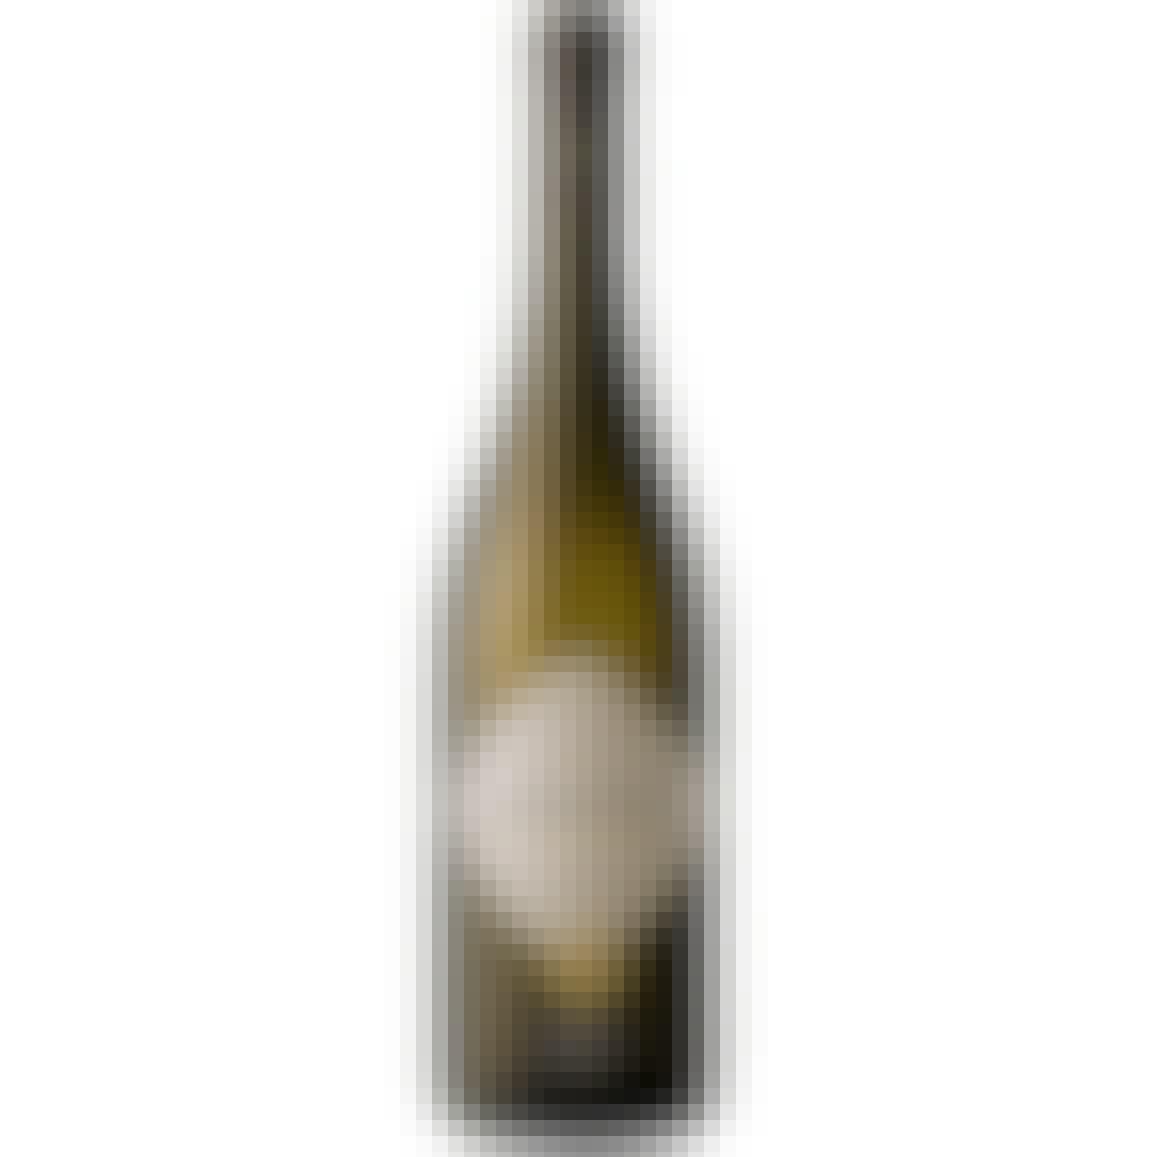  Cantina Lavis  Trentino Chardonnay 2020 750ml